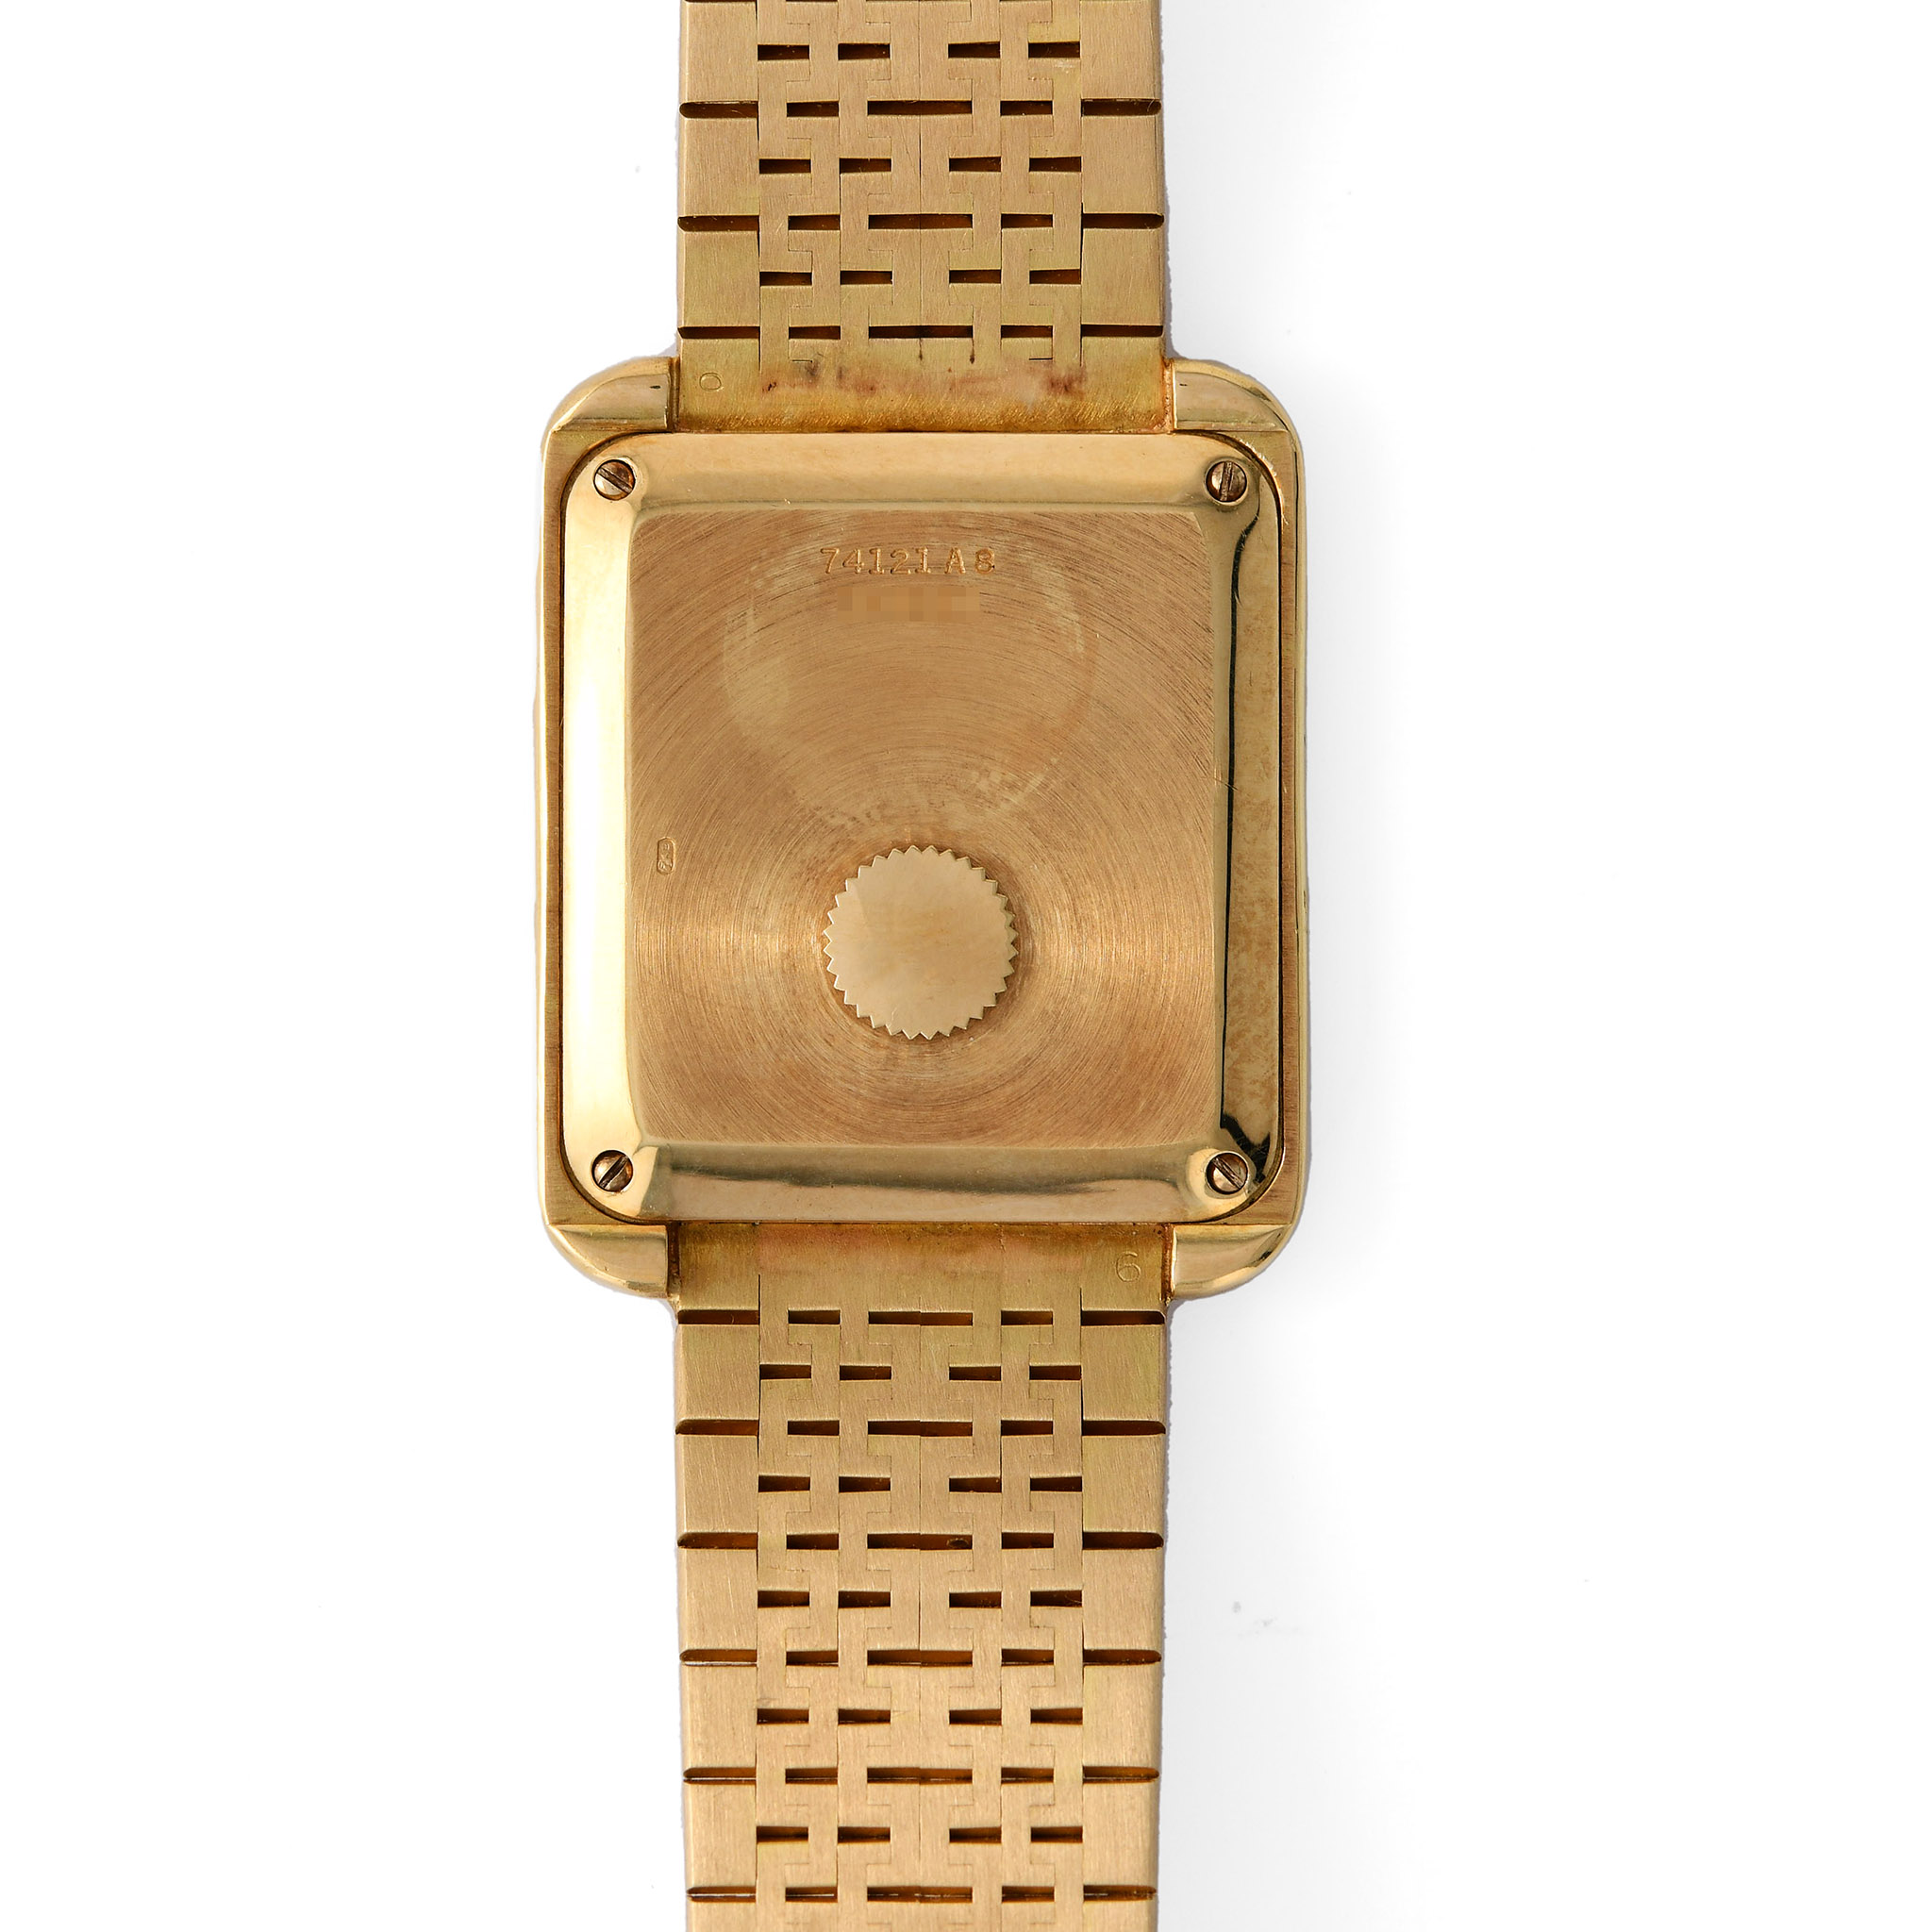 piaget-ref74121a8-bracelet-wristwatch-img-main2